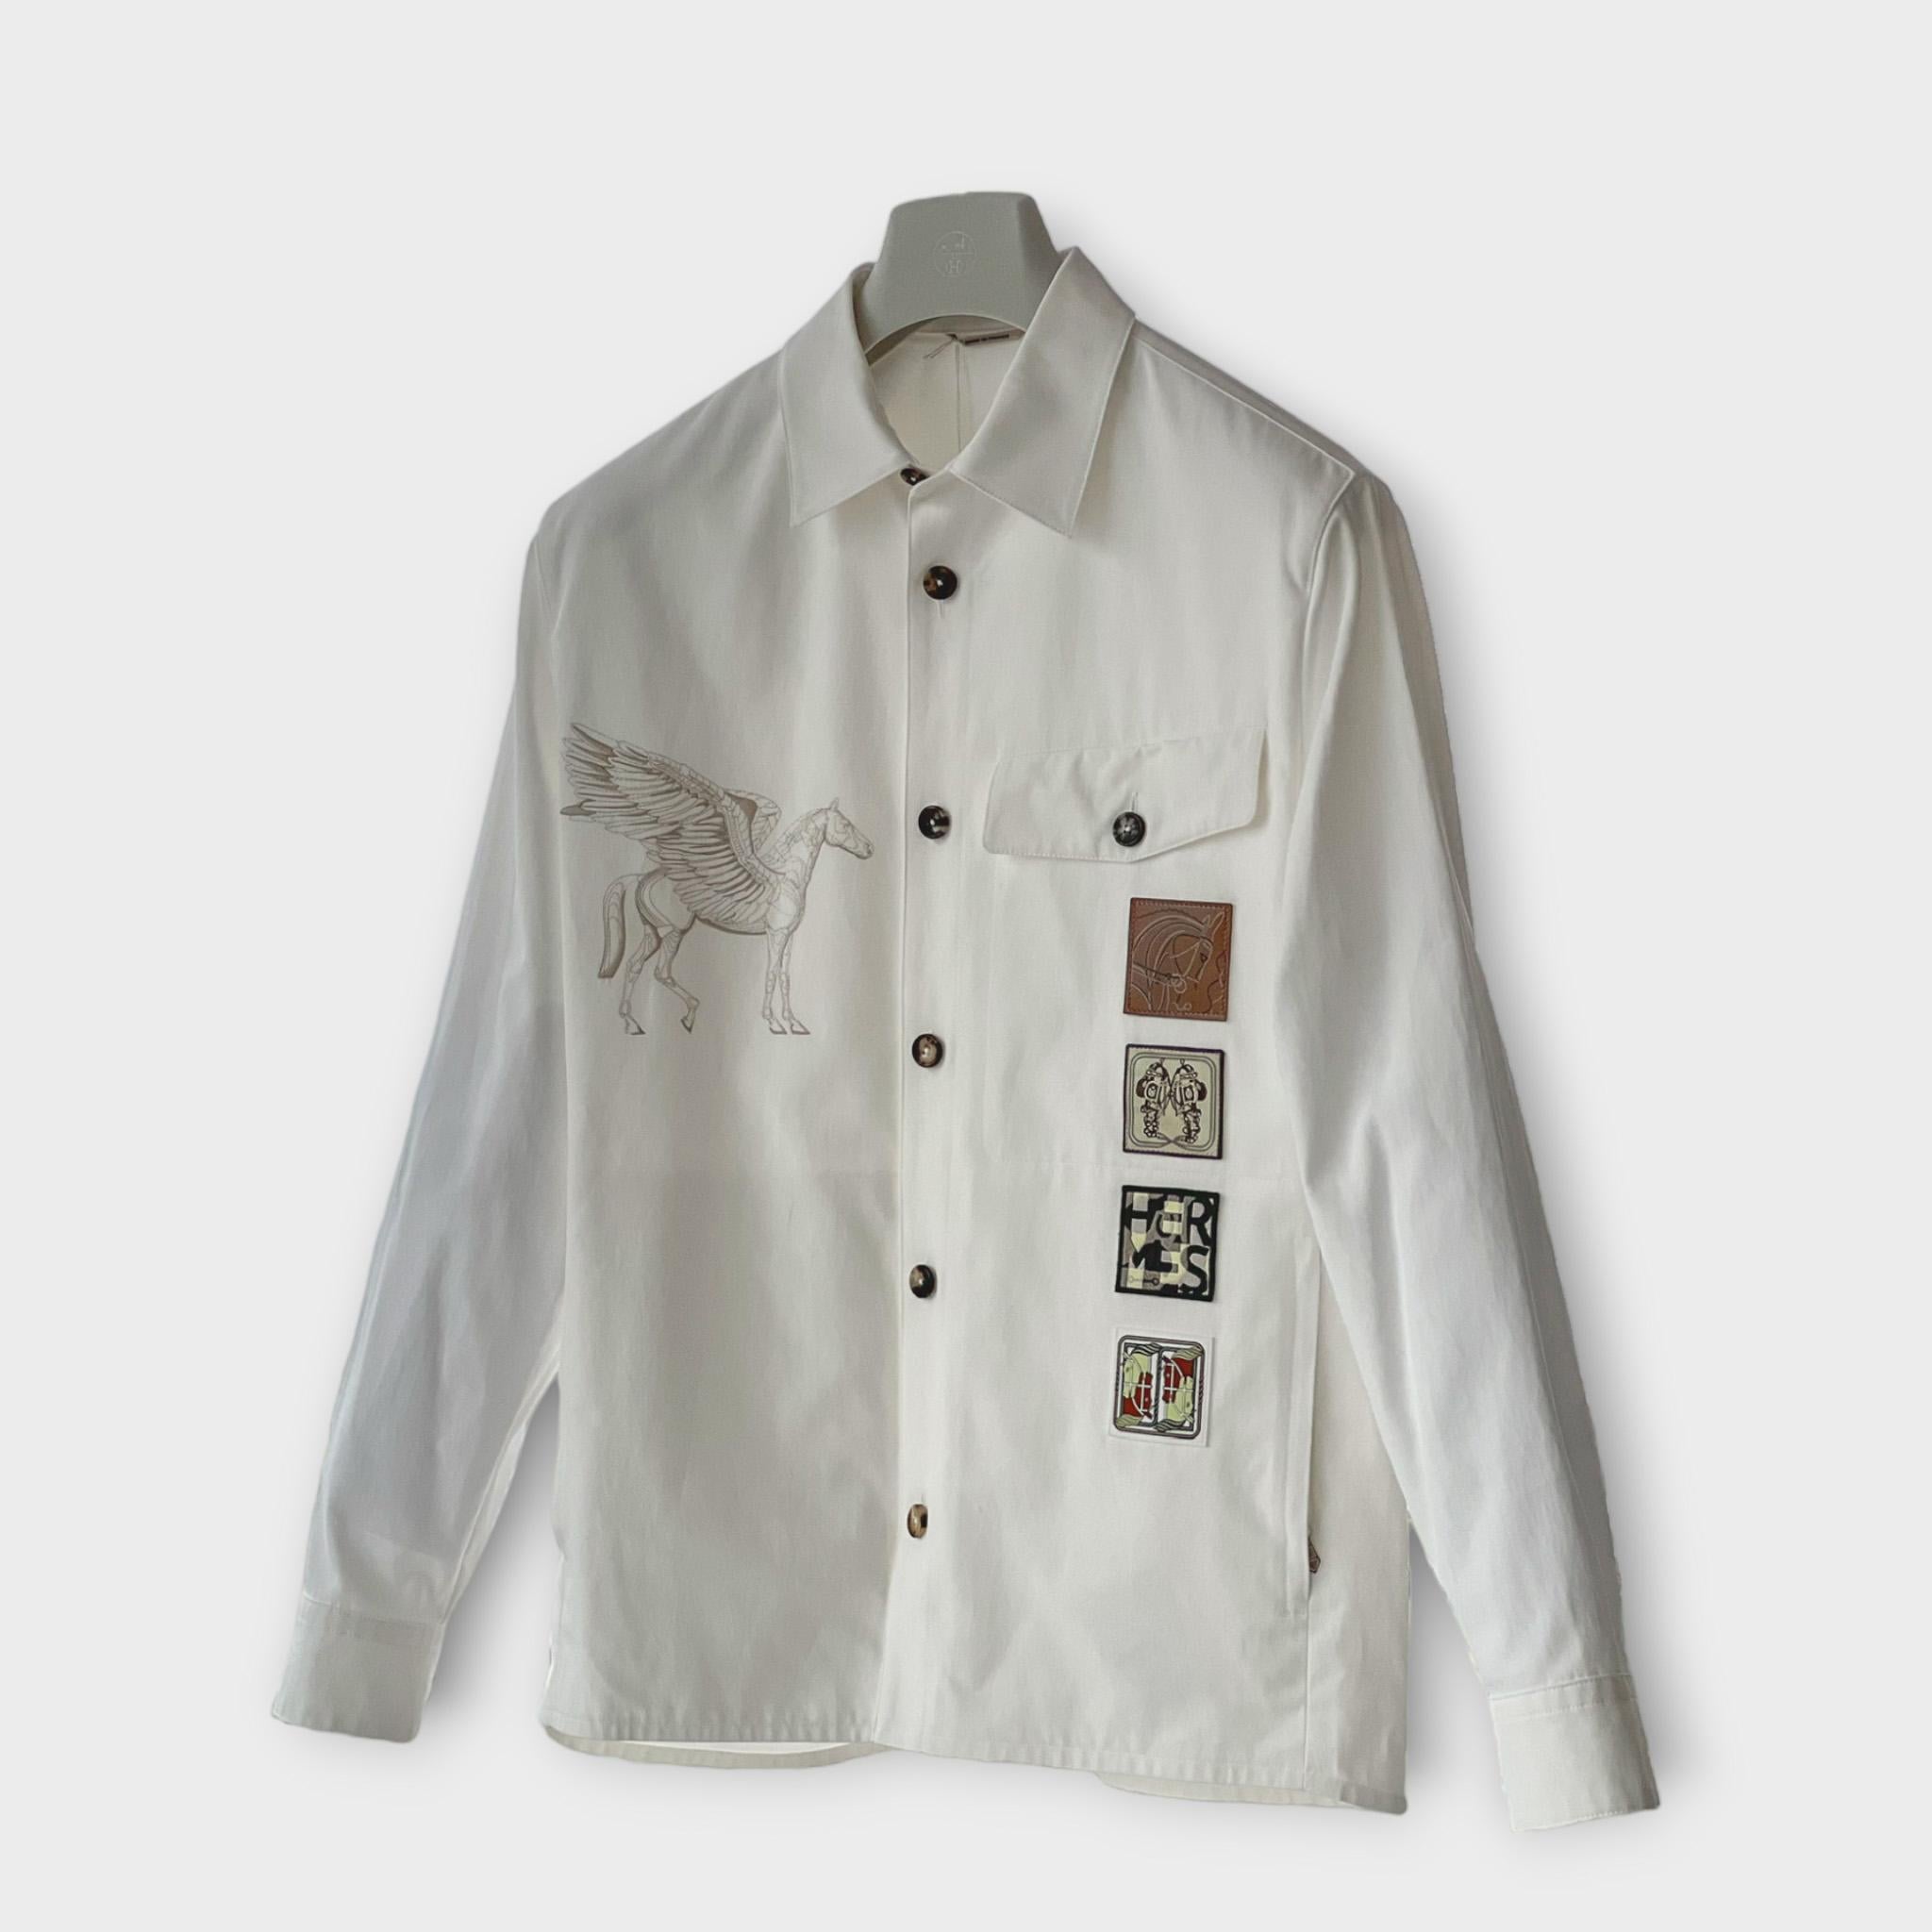 Hermès Men's 'Icones au Carre' Overshirt, White, 48 EU, Medium UK For Sale 6